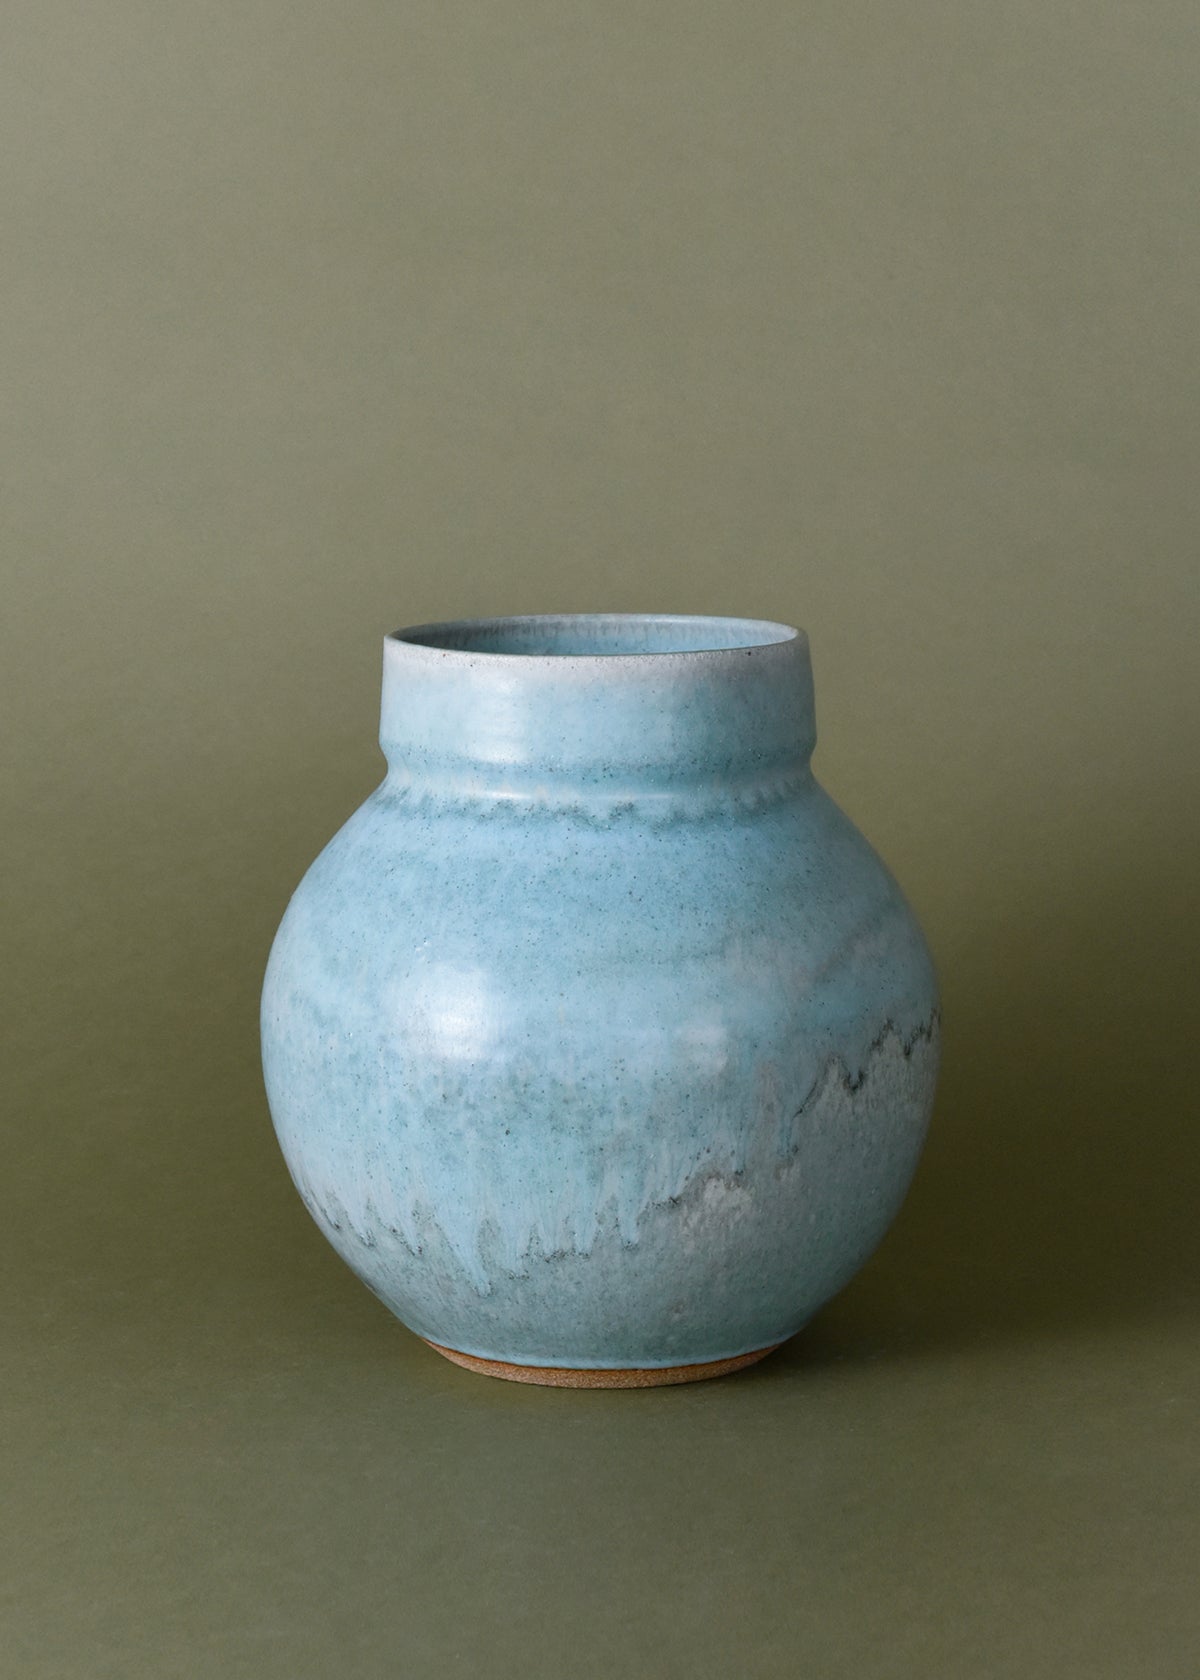 Vases - Victoria Morris Pottery